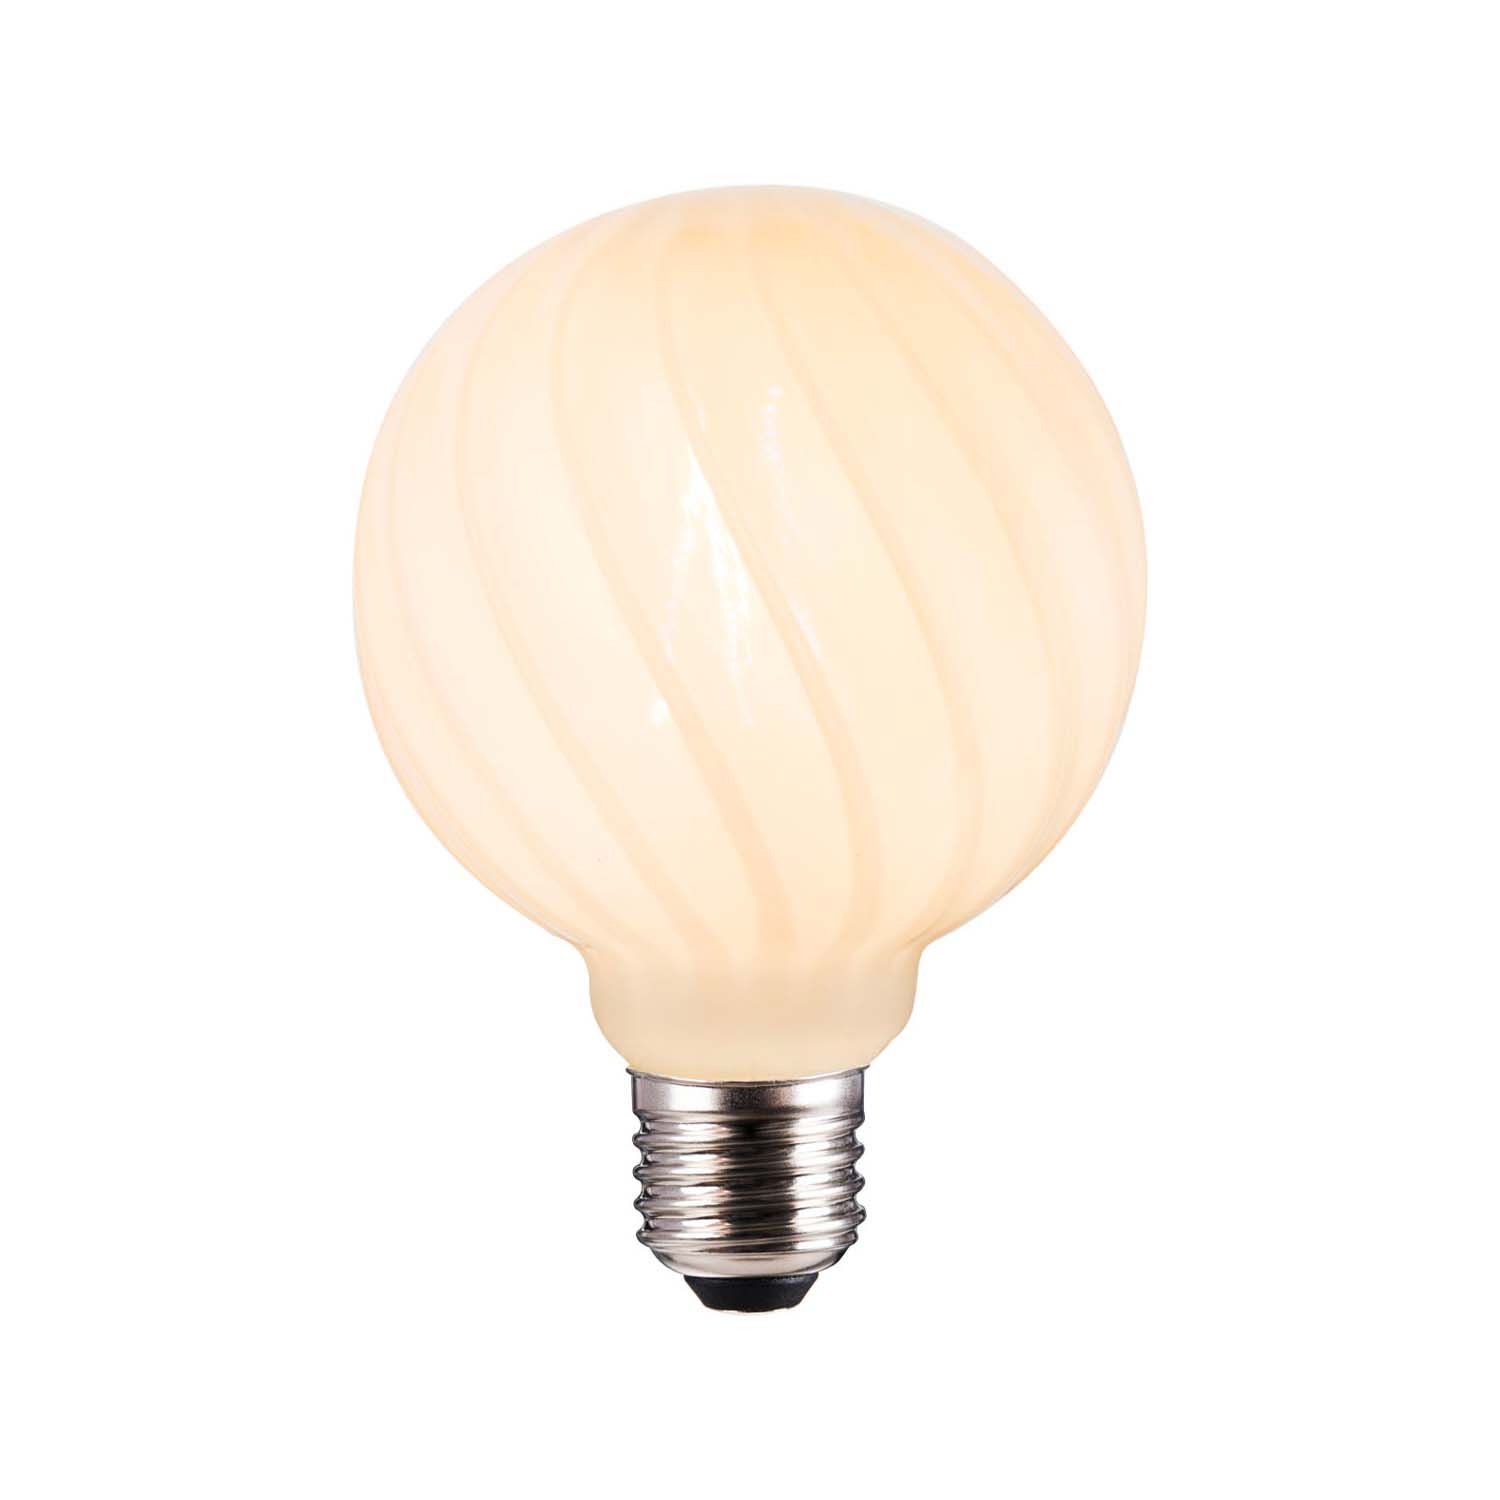 Twist - E27 LED bulb with twisted effect